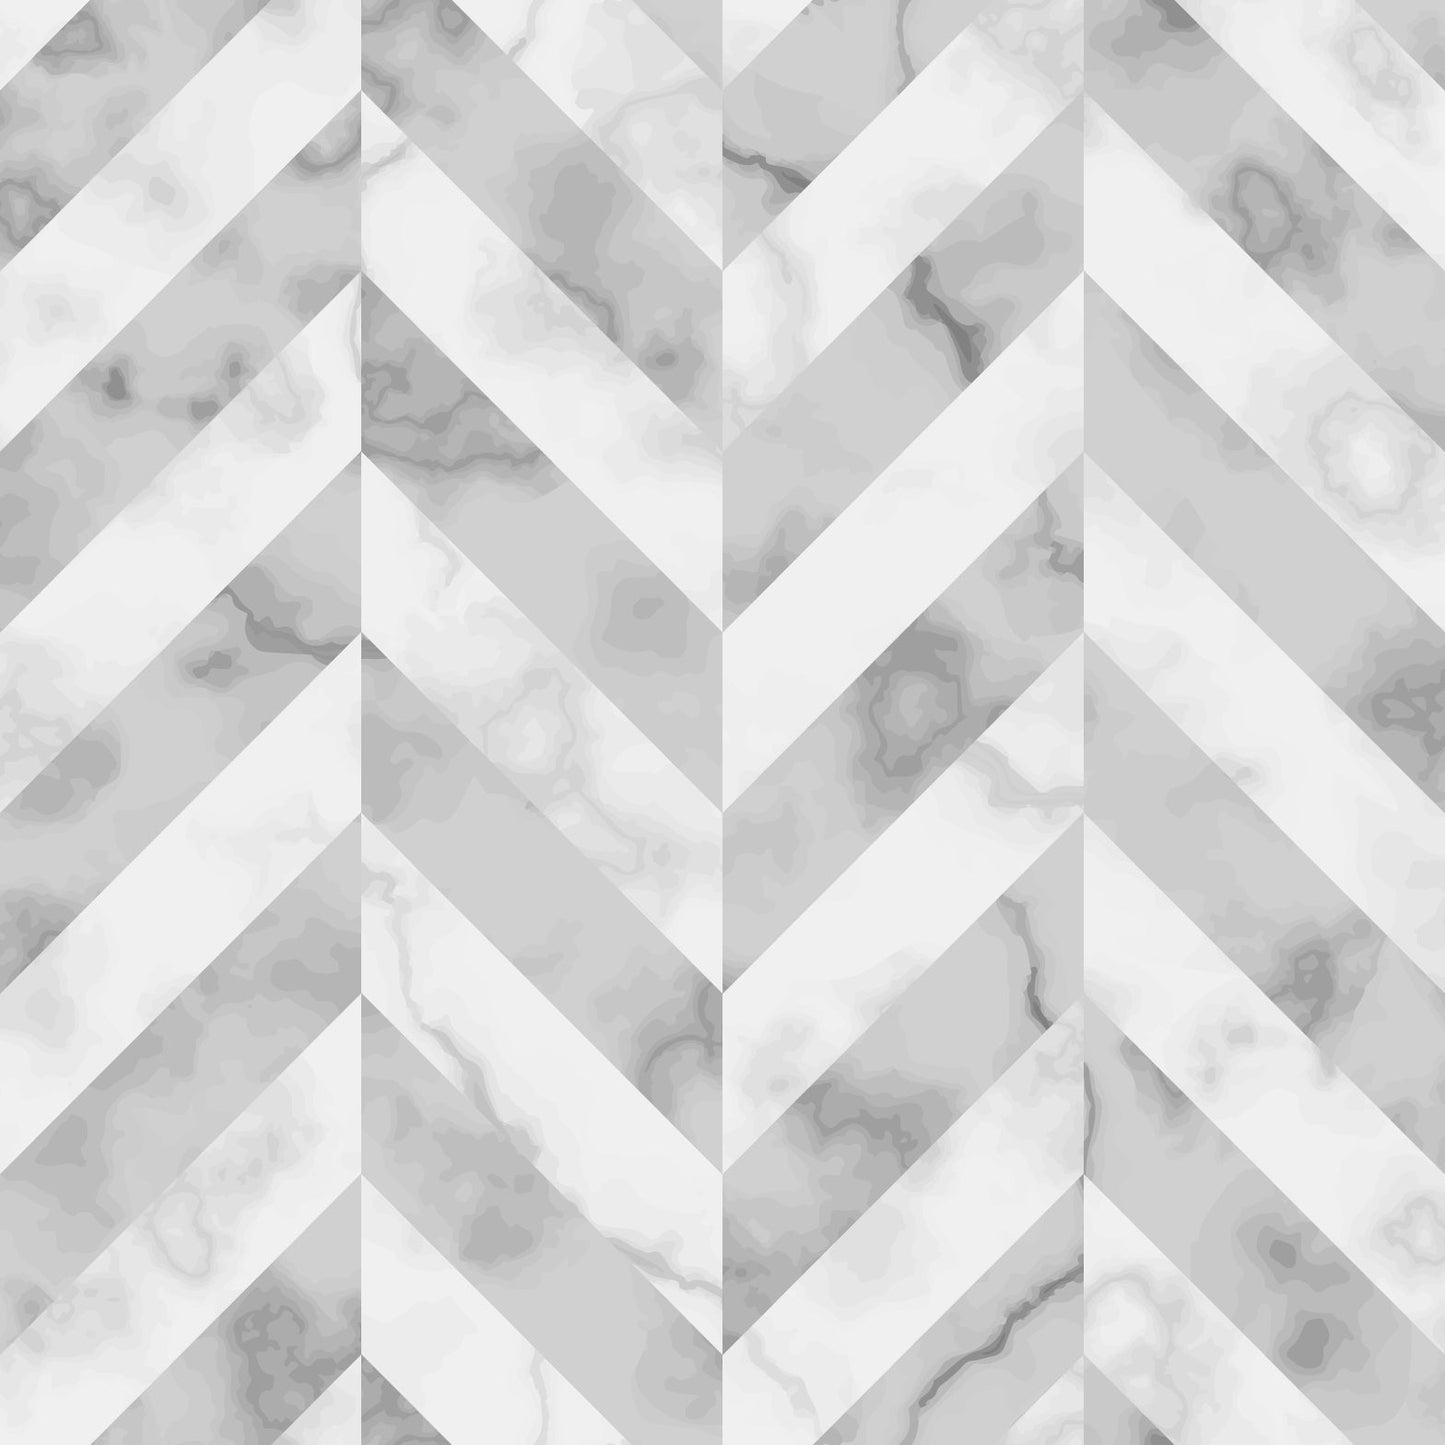 Marble Tiles of Grey & White (Adhesive Vinyl - 12" x 12" Printed Sheet)